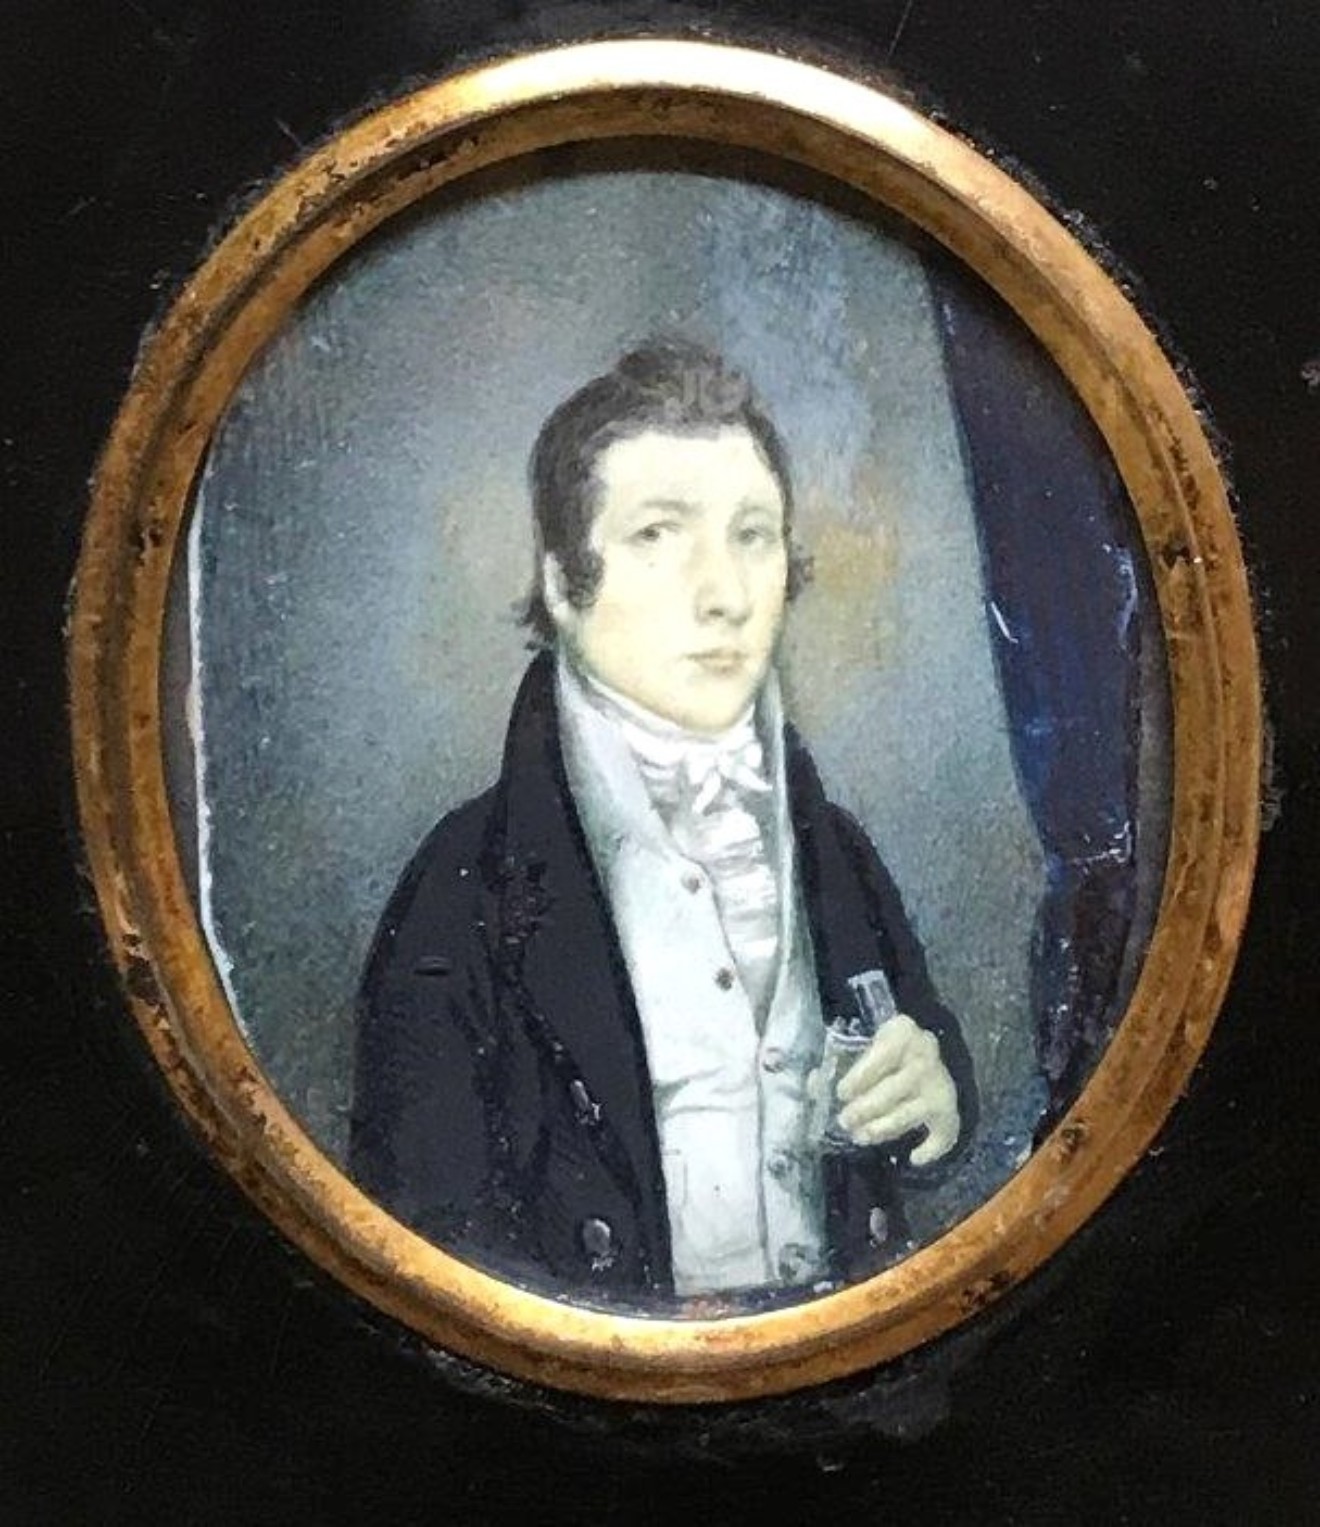 Victorian Coloured Miniature Portrait / Silhouette of a Gentleman